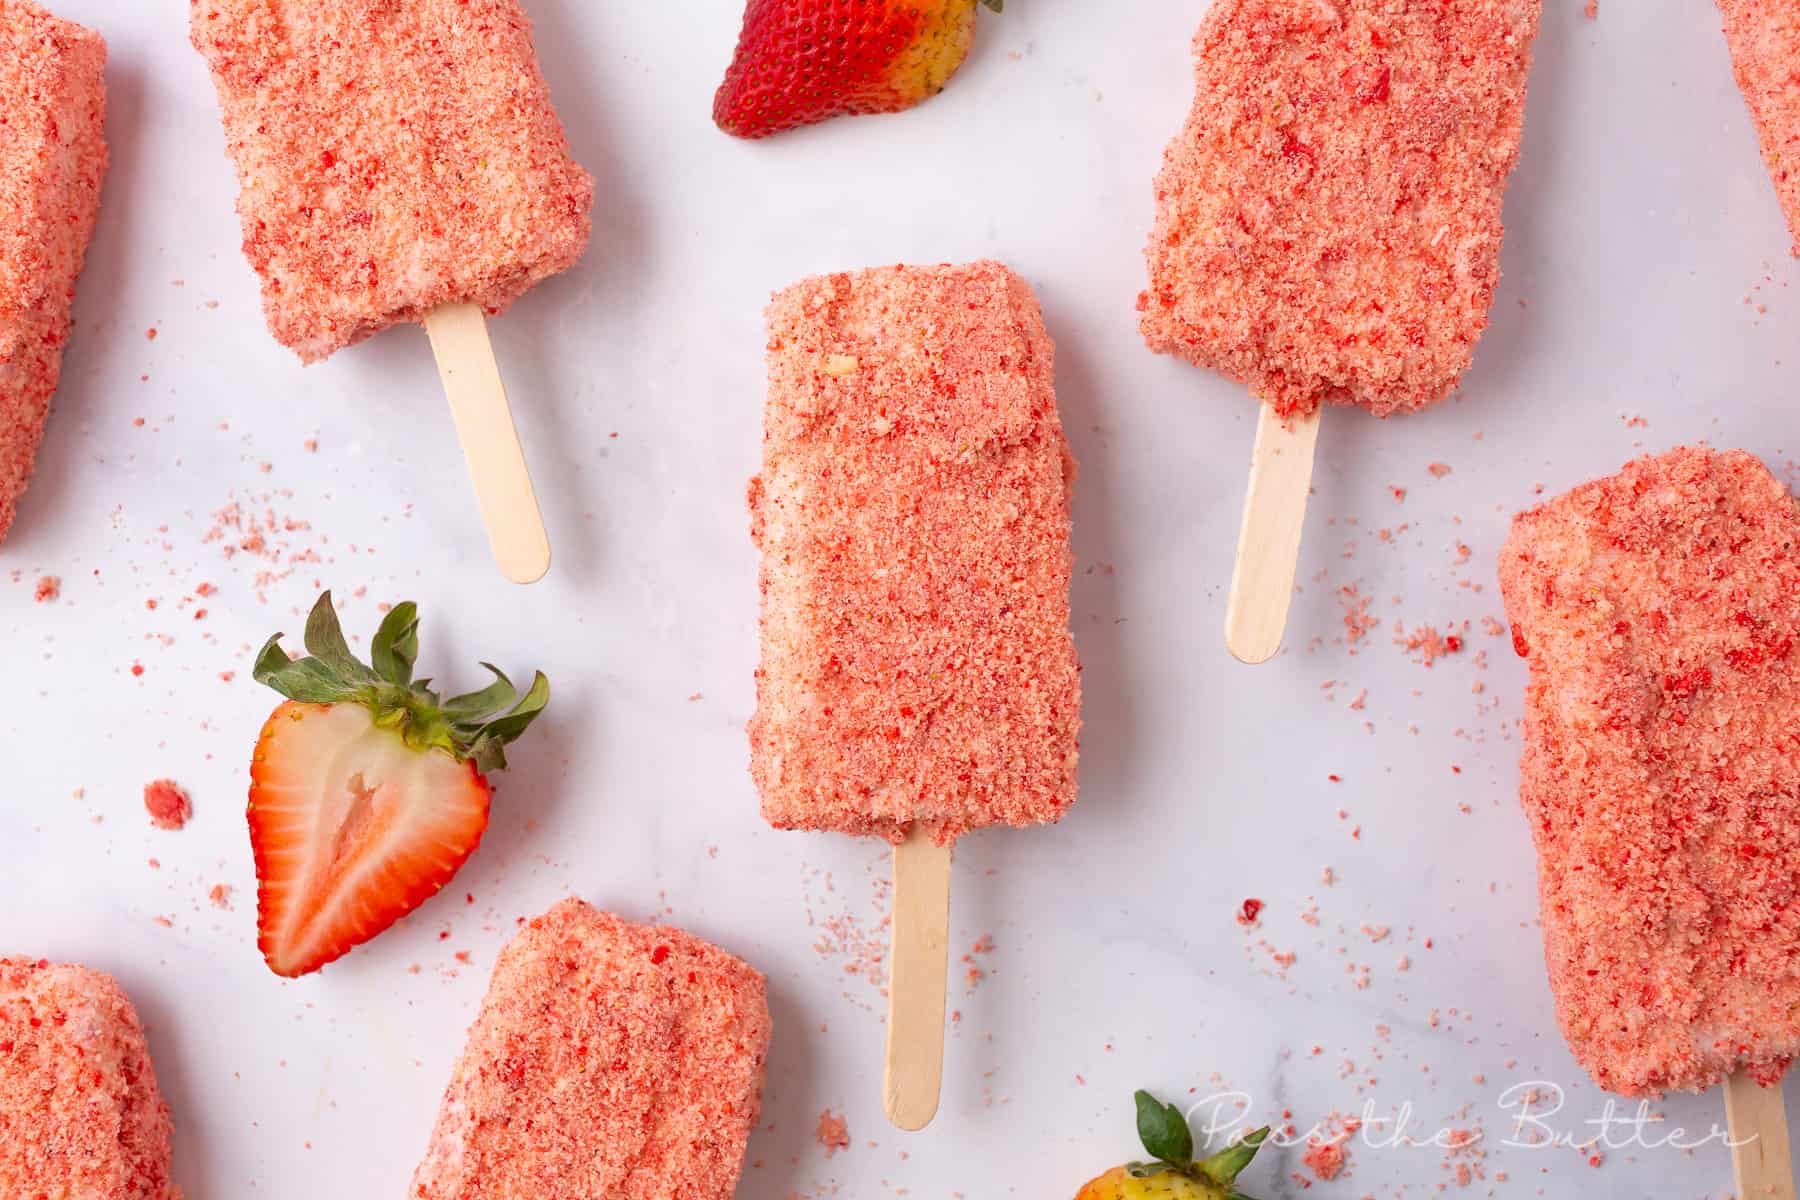 homemade strawberry shortcake ice cream bars on a baking sheet with fresh strawberries